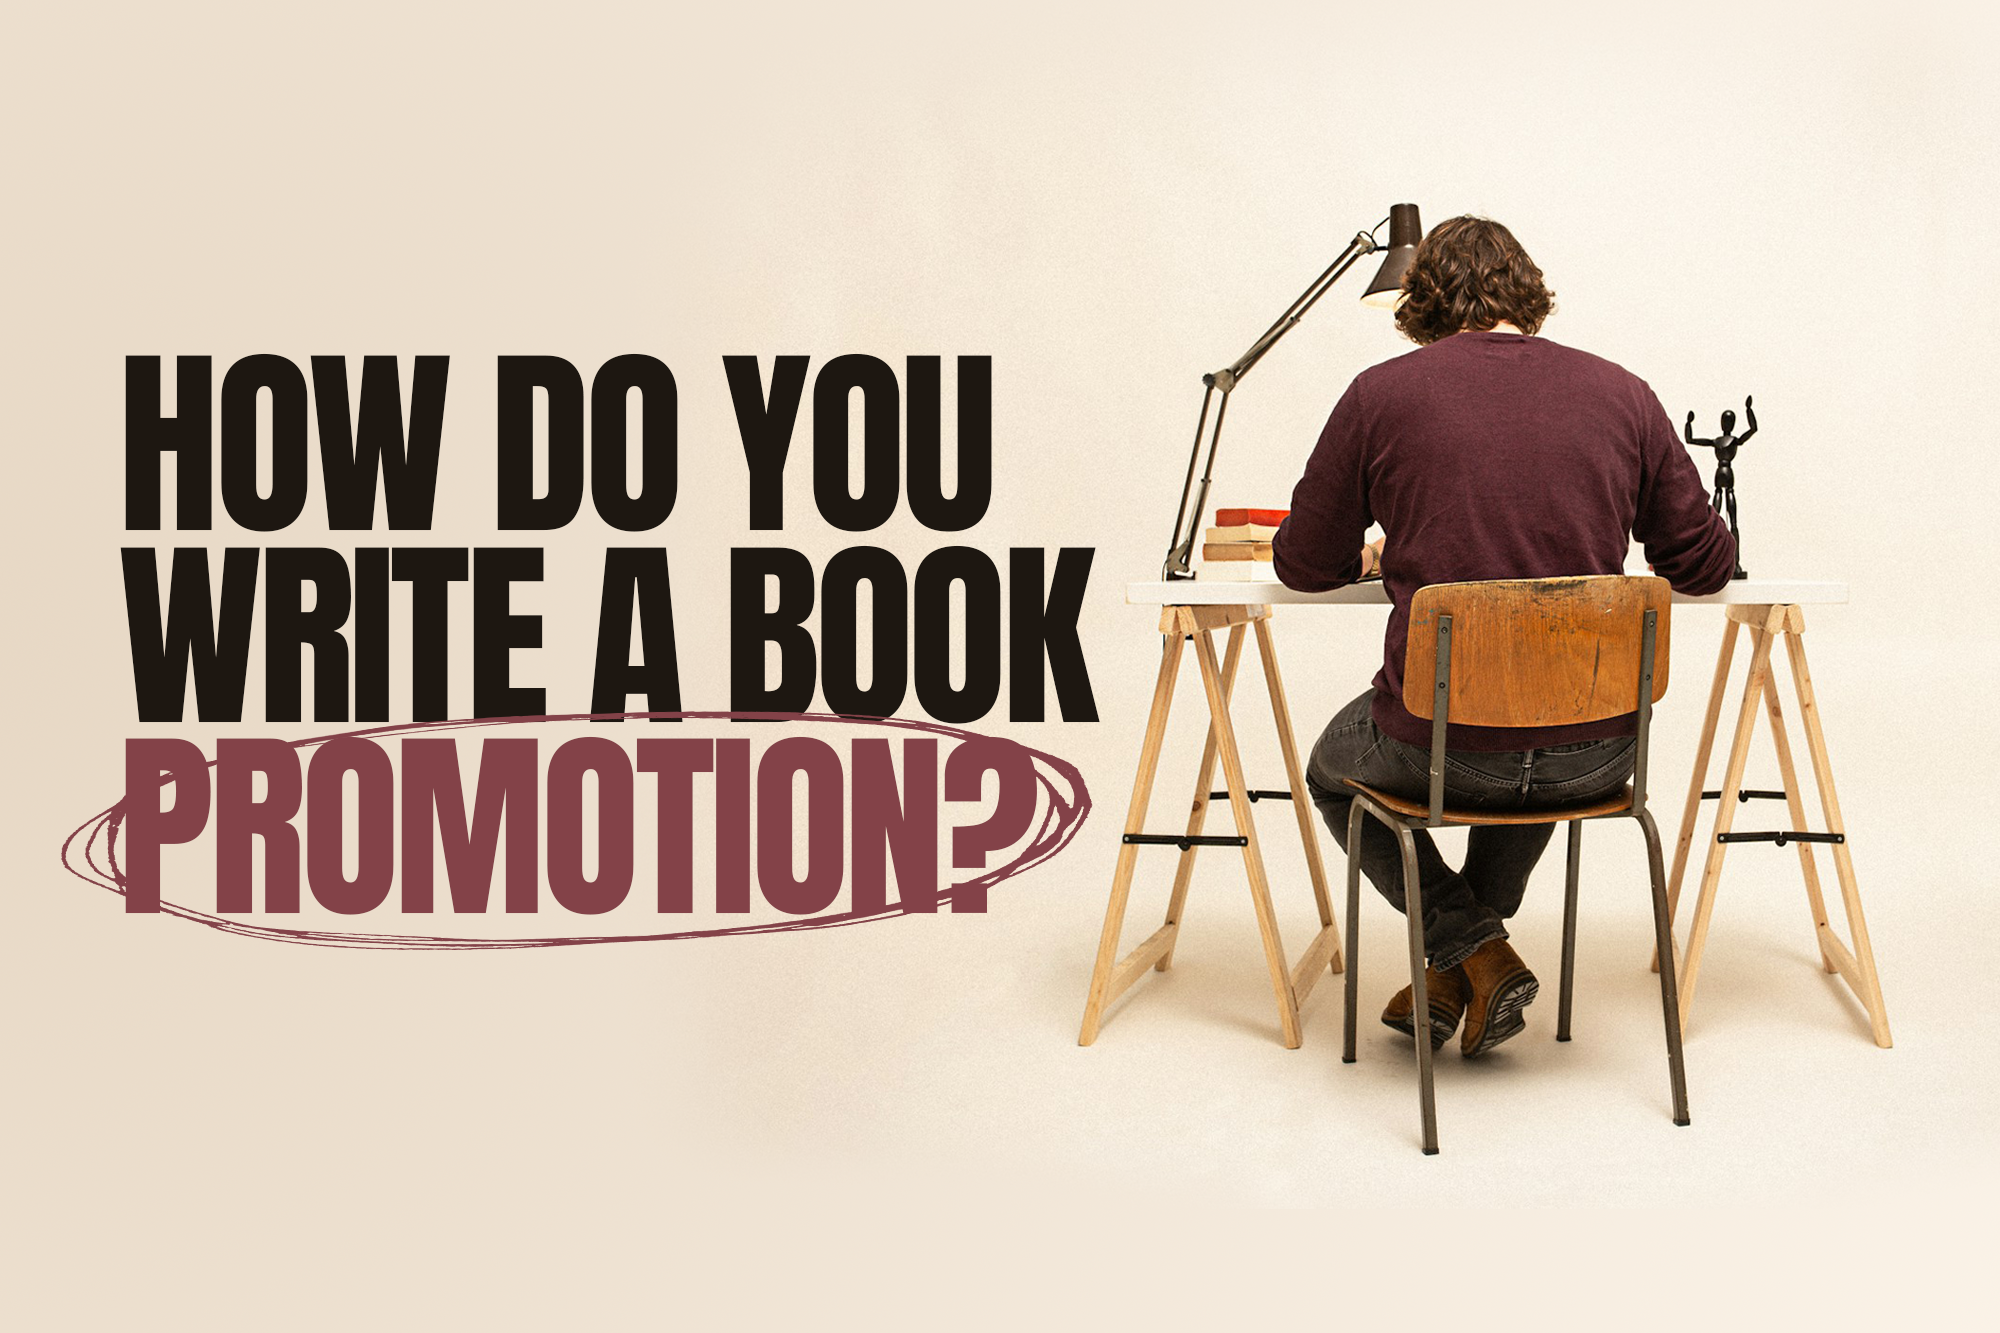 How do you write a book promotion